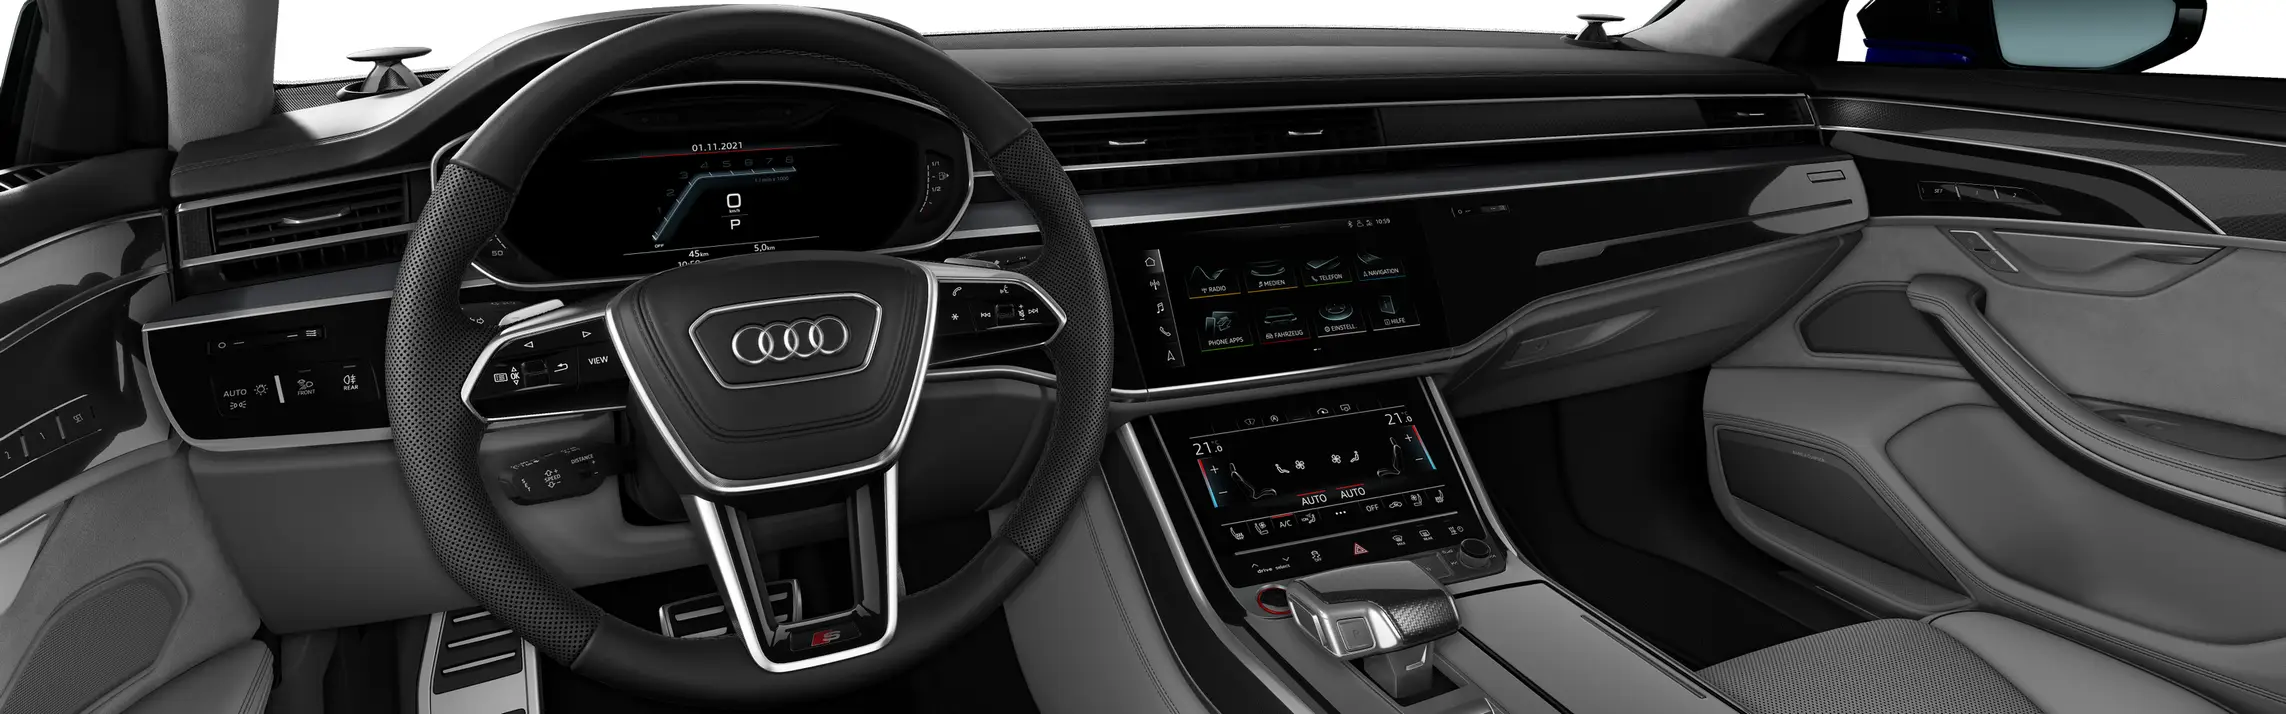 Audi S8 interior - Cockpit